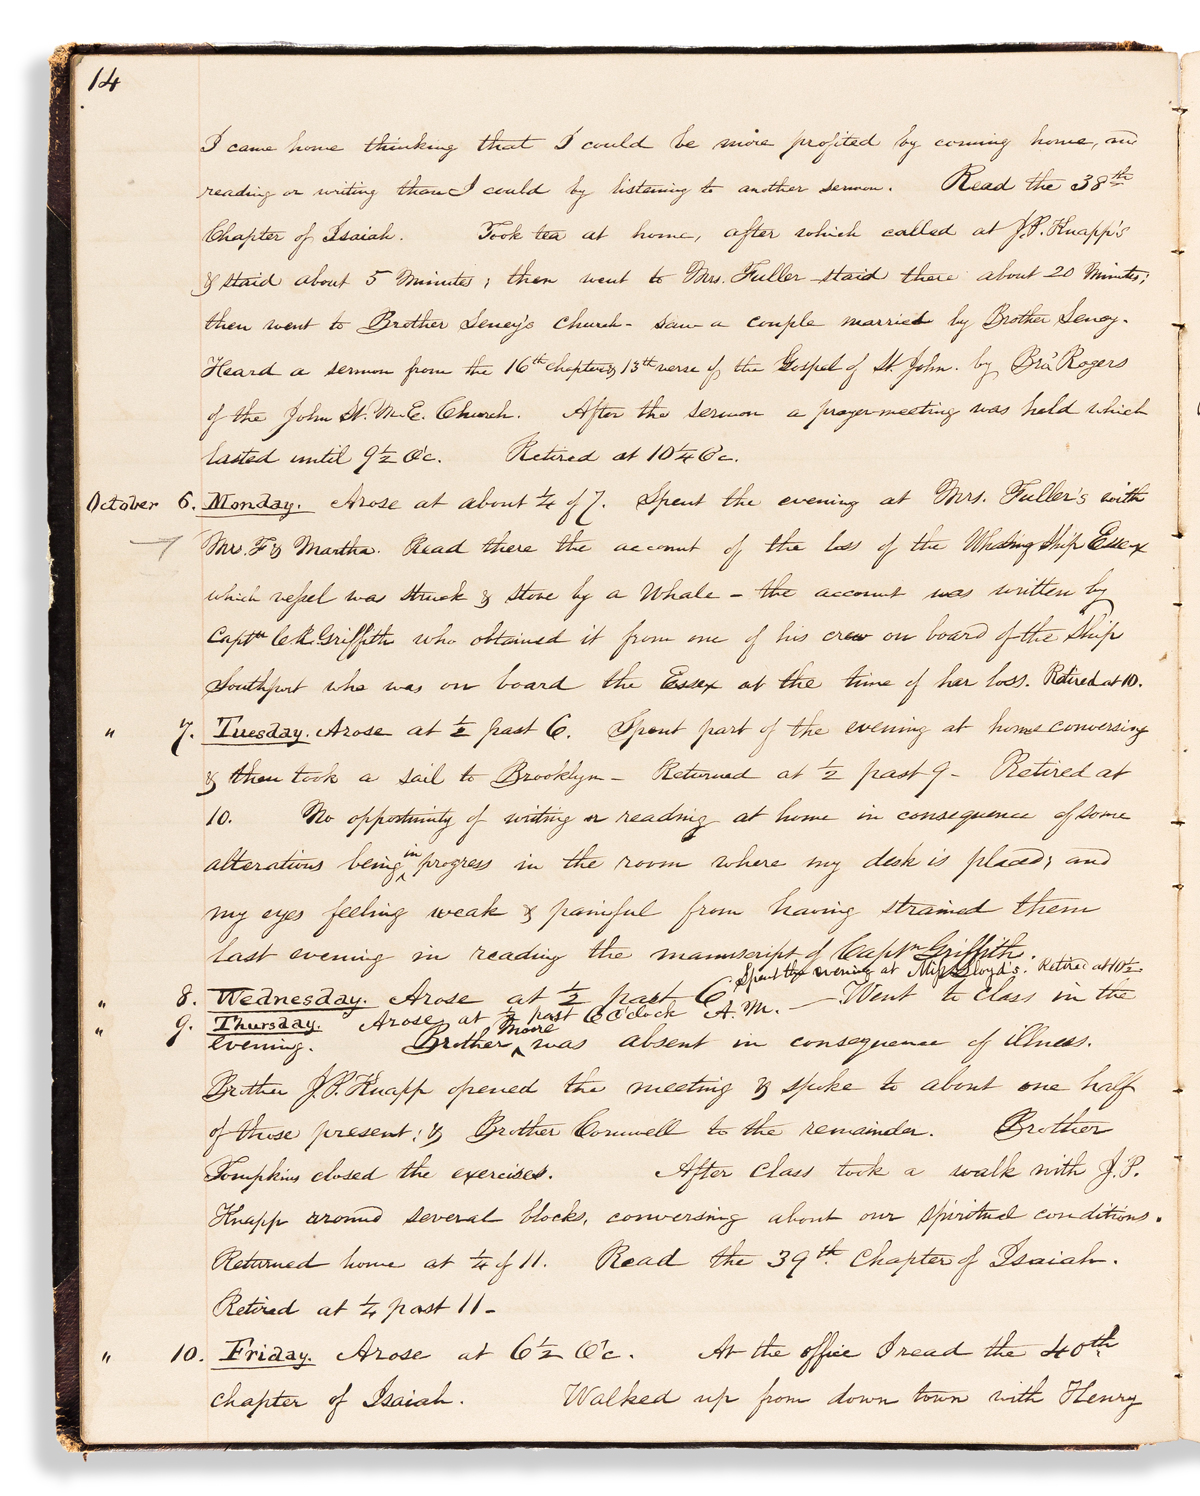 (NEW YORK CITY.) James Horton Taft. Diary of a young man in 1840s Manhattan.